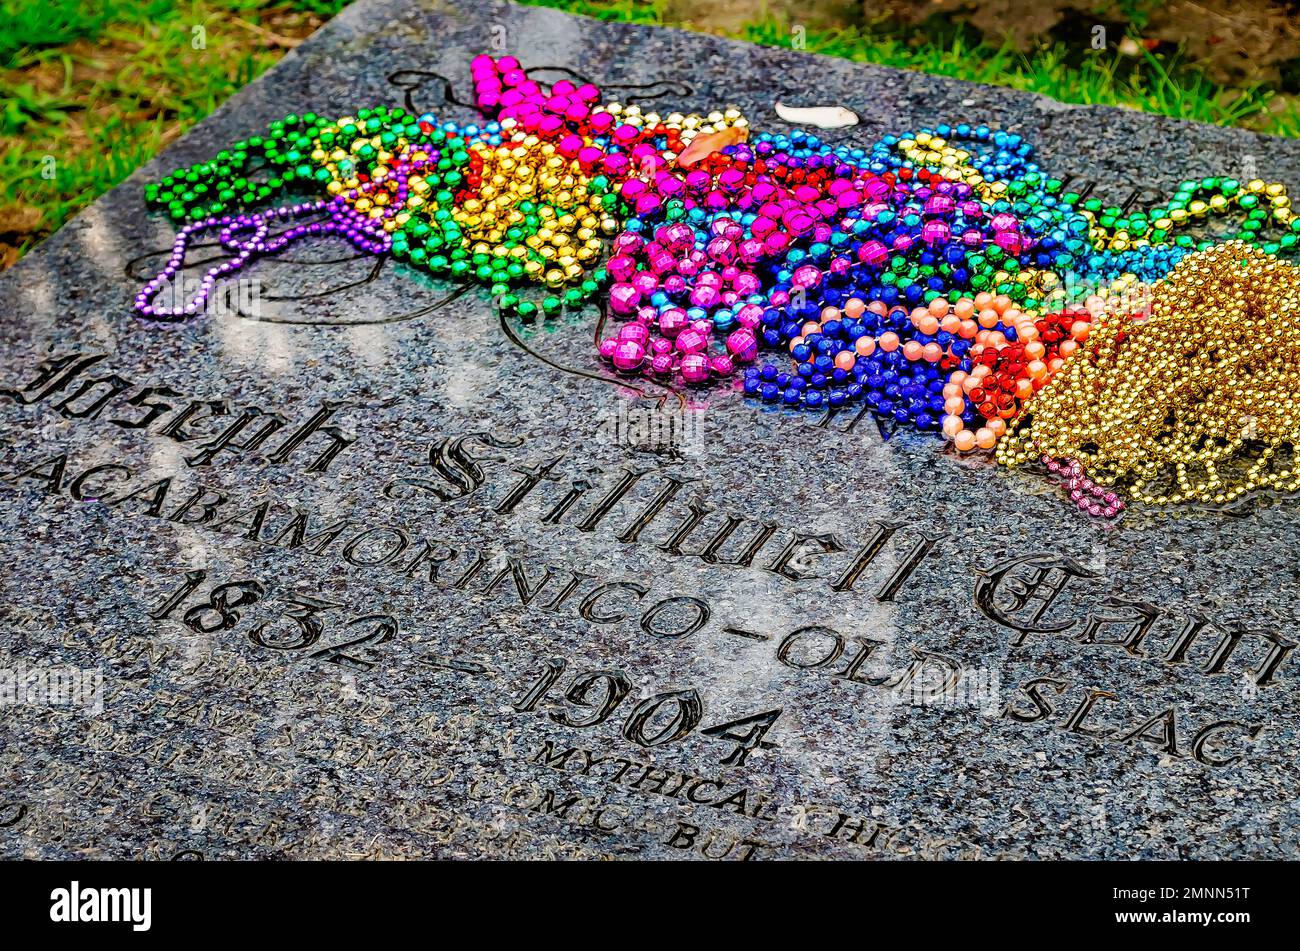 Mardi Gras beads are strewn across Joe Cain’s grave in Church Street Graveyard, Jan. 30, 2023, in Mobile, Alabama. Stock Photo